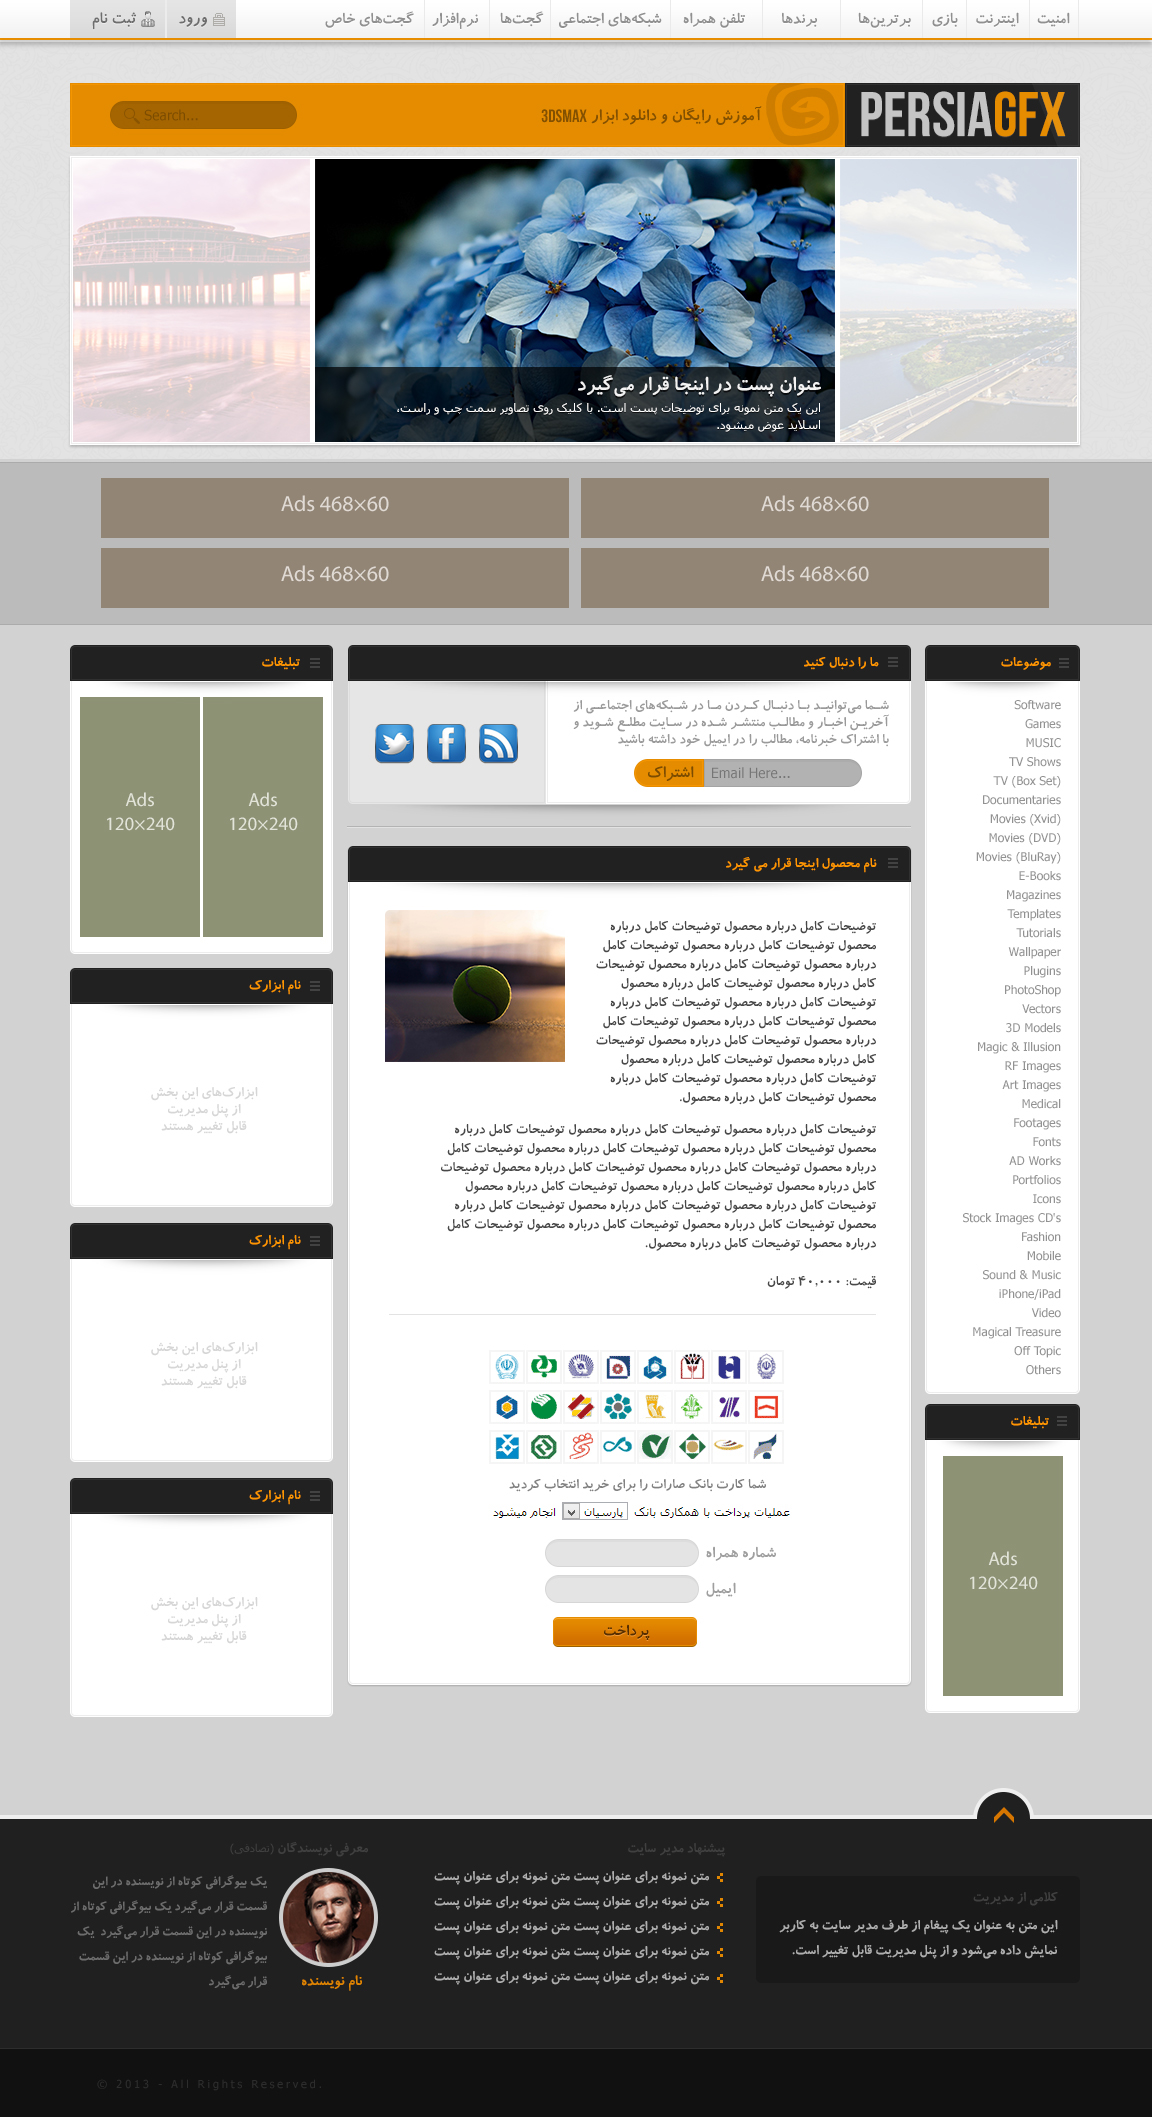 PersiaGFX UI consept by Pouya Saadeghi - /projects/AMFotZAocSYfL4USrTgGNYF5149R6WV3.jpg